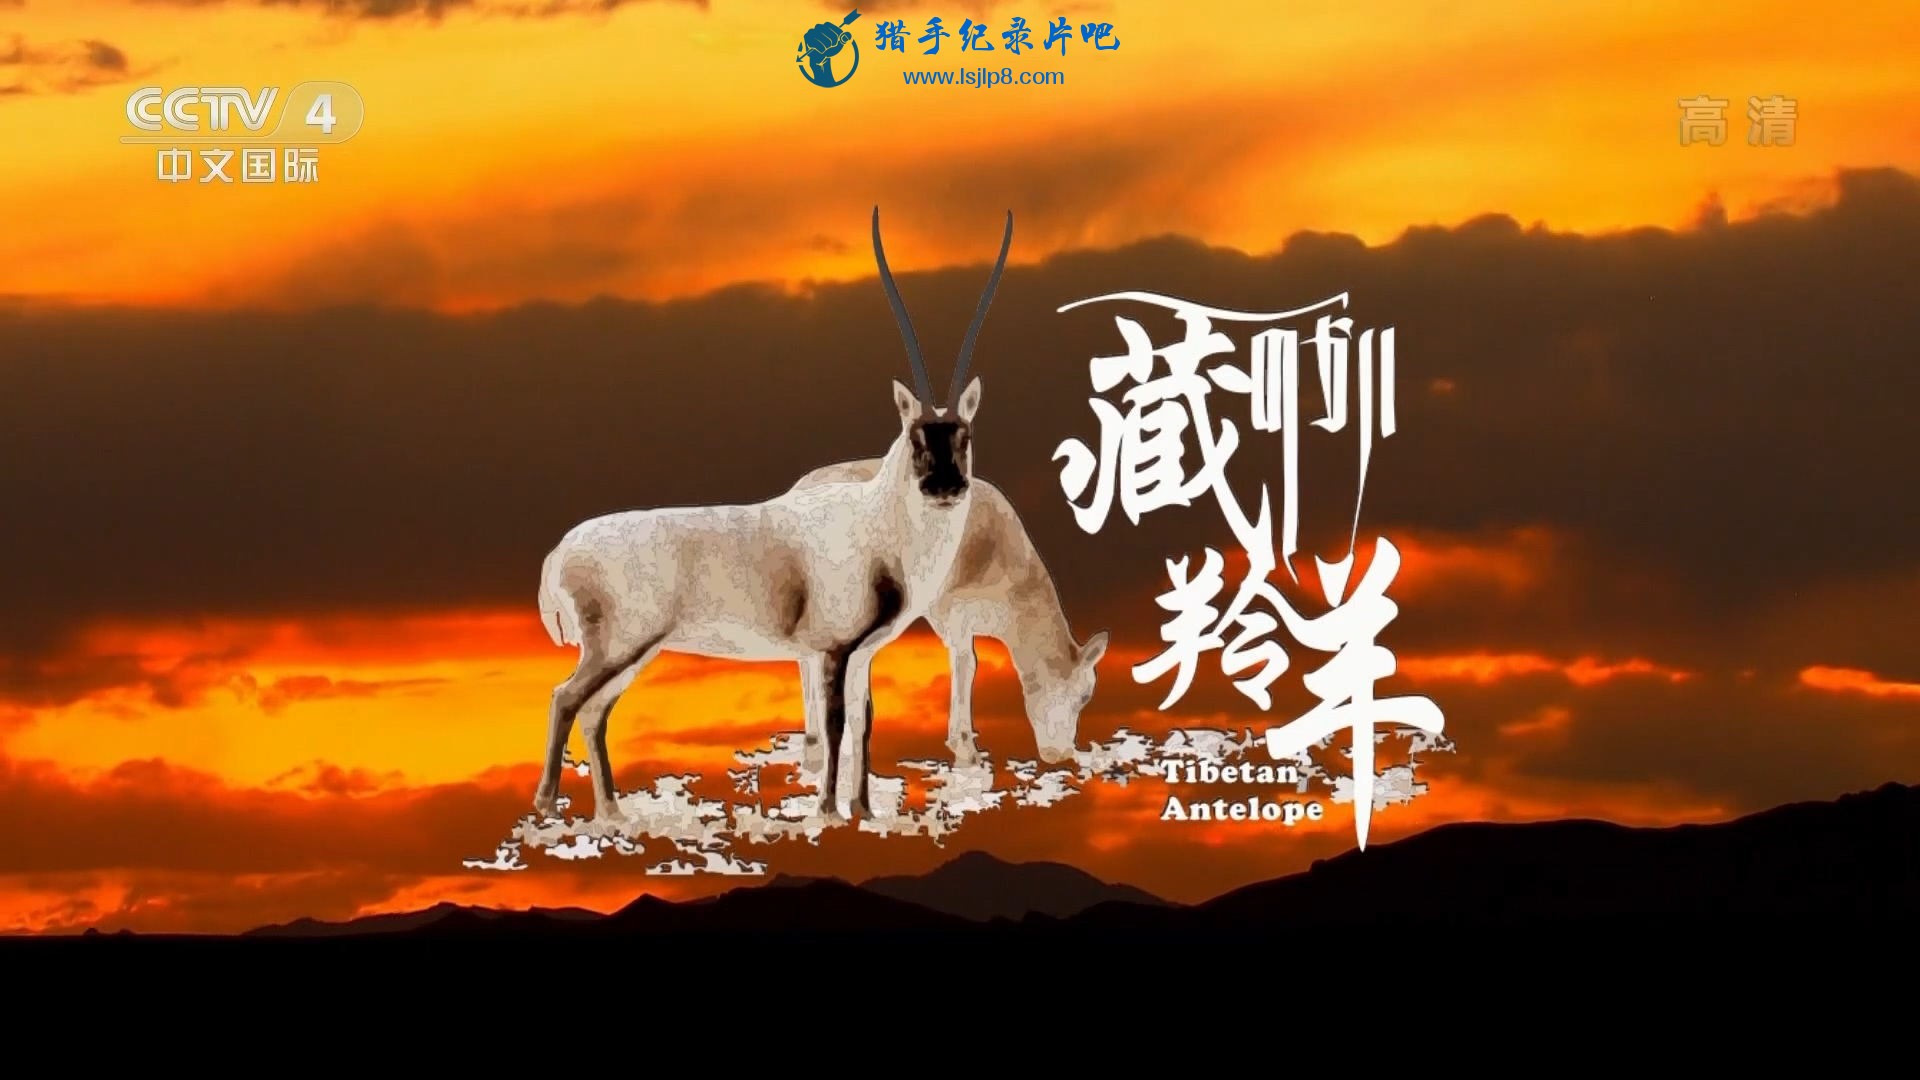 藏羚羊.HDTV.1080i.H264.AAC.[www.lsjlp8.com].jpg